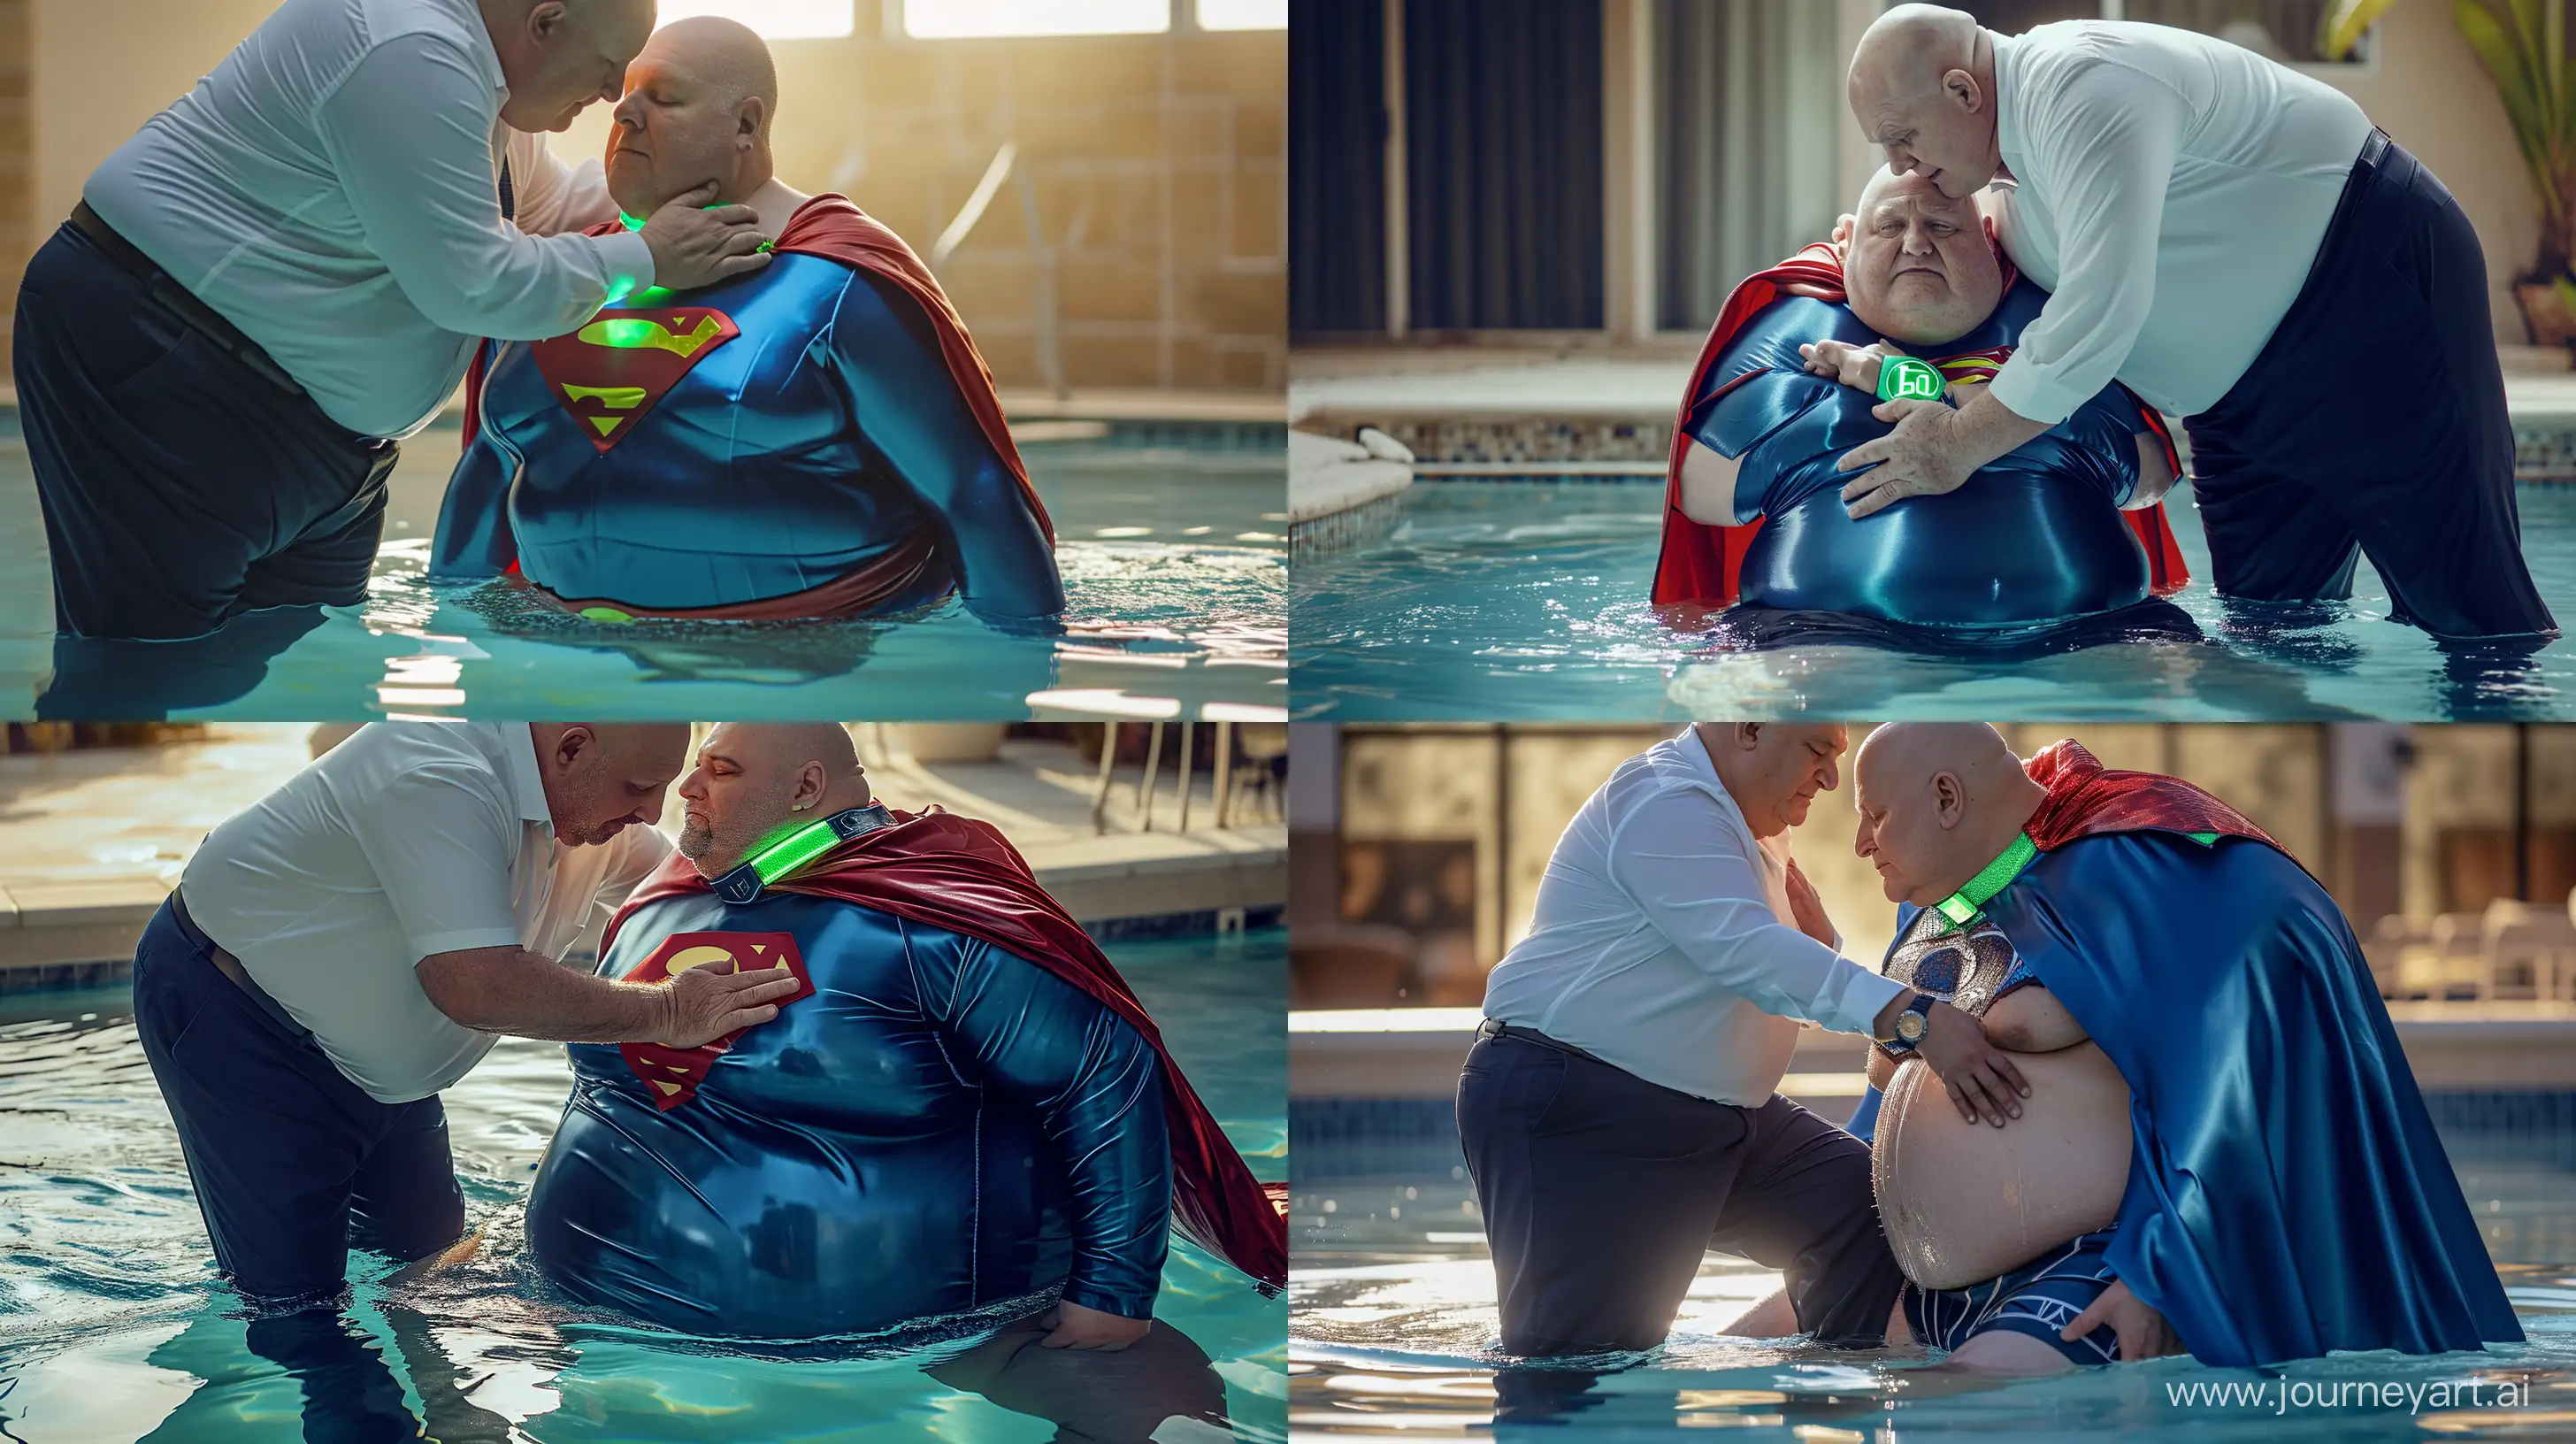 Elderly-Friends-Enjoying-Playful-Pool-Time-in-Silky-Superhero-Costumes